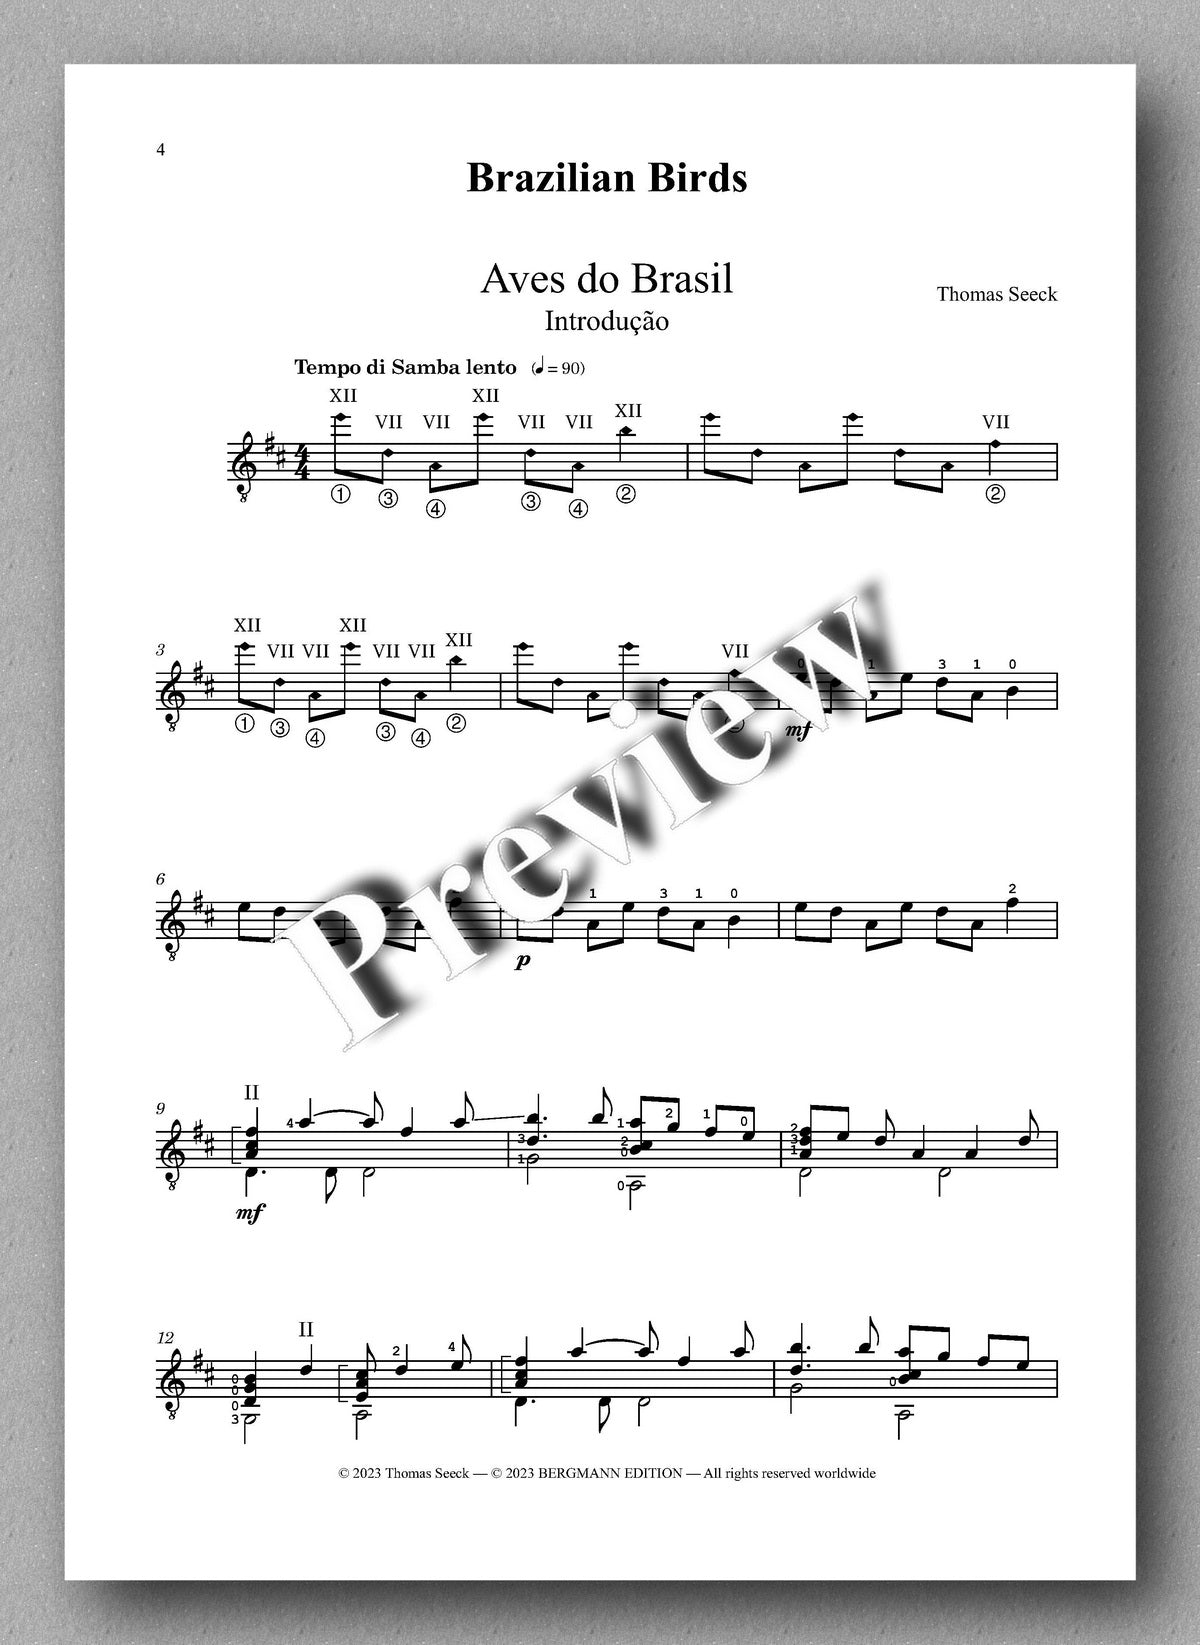 Thomas Seeck, Brazilian Birds - preview of the music score 1